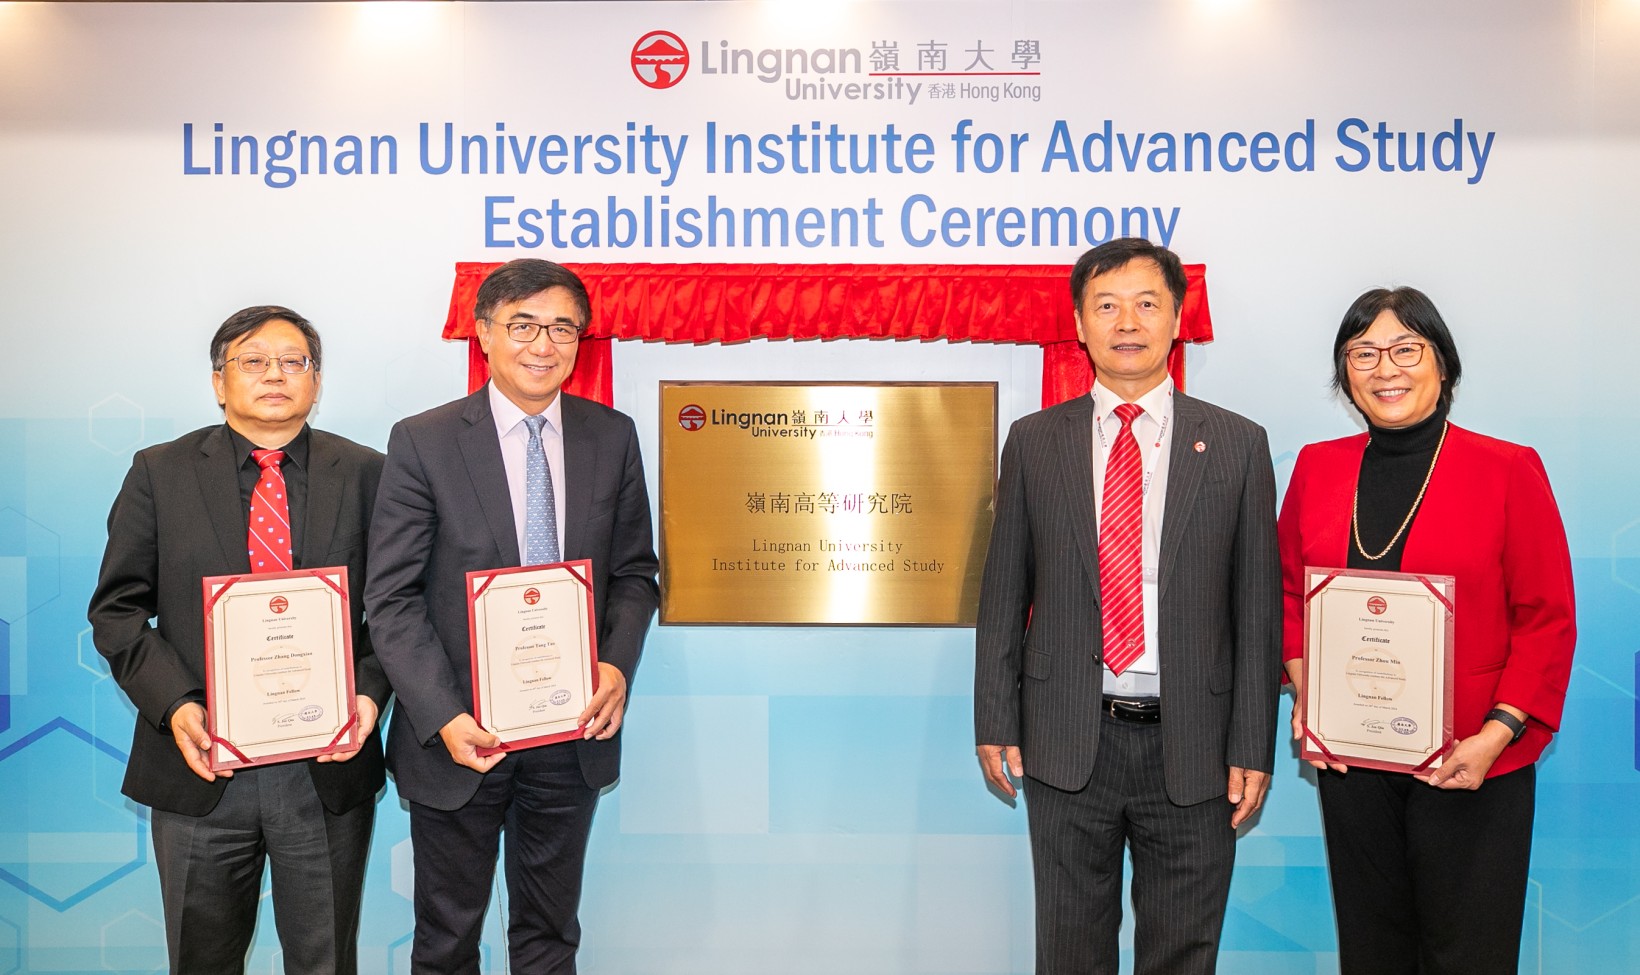 President Prof S. Joe Qin (second right) presents certificates to Lingnan Fellows Prof Tang Tao (second left), Prof Zhang Dongxiao (left), and Prof Zhou Min (right).